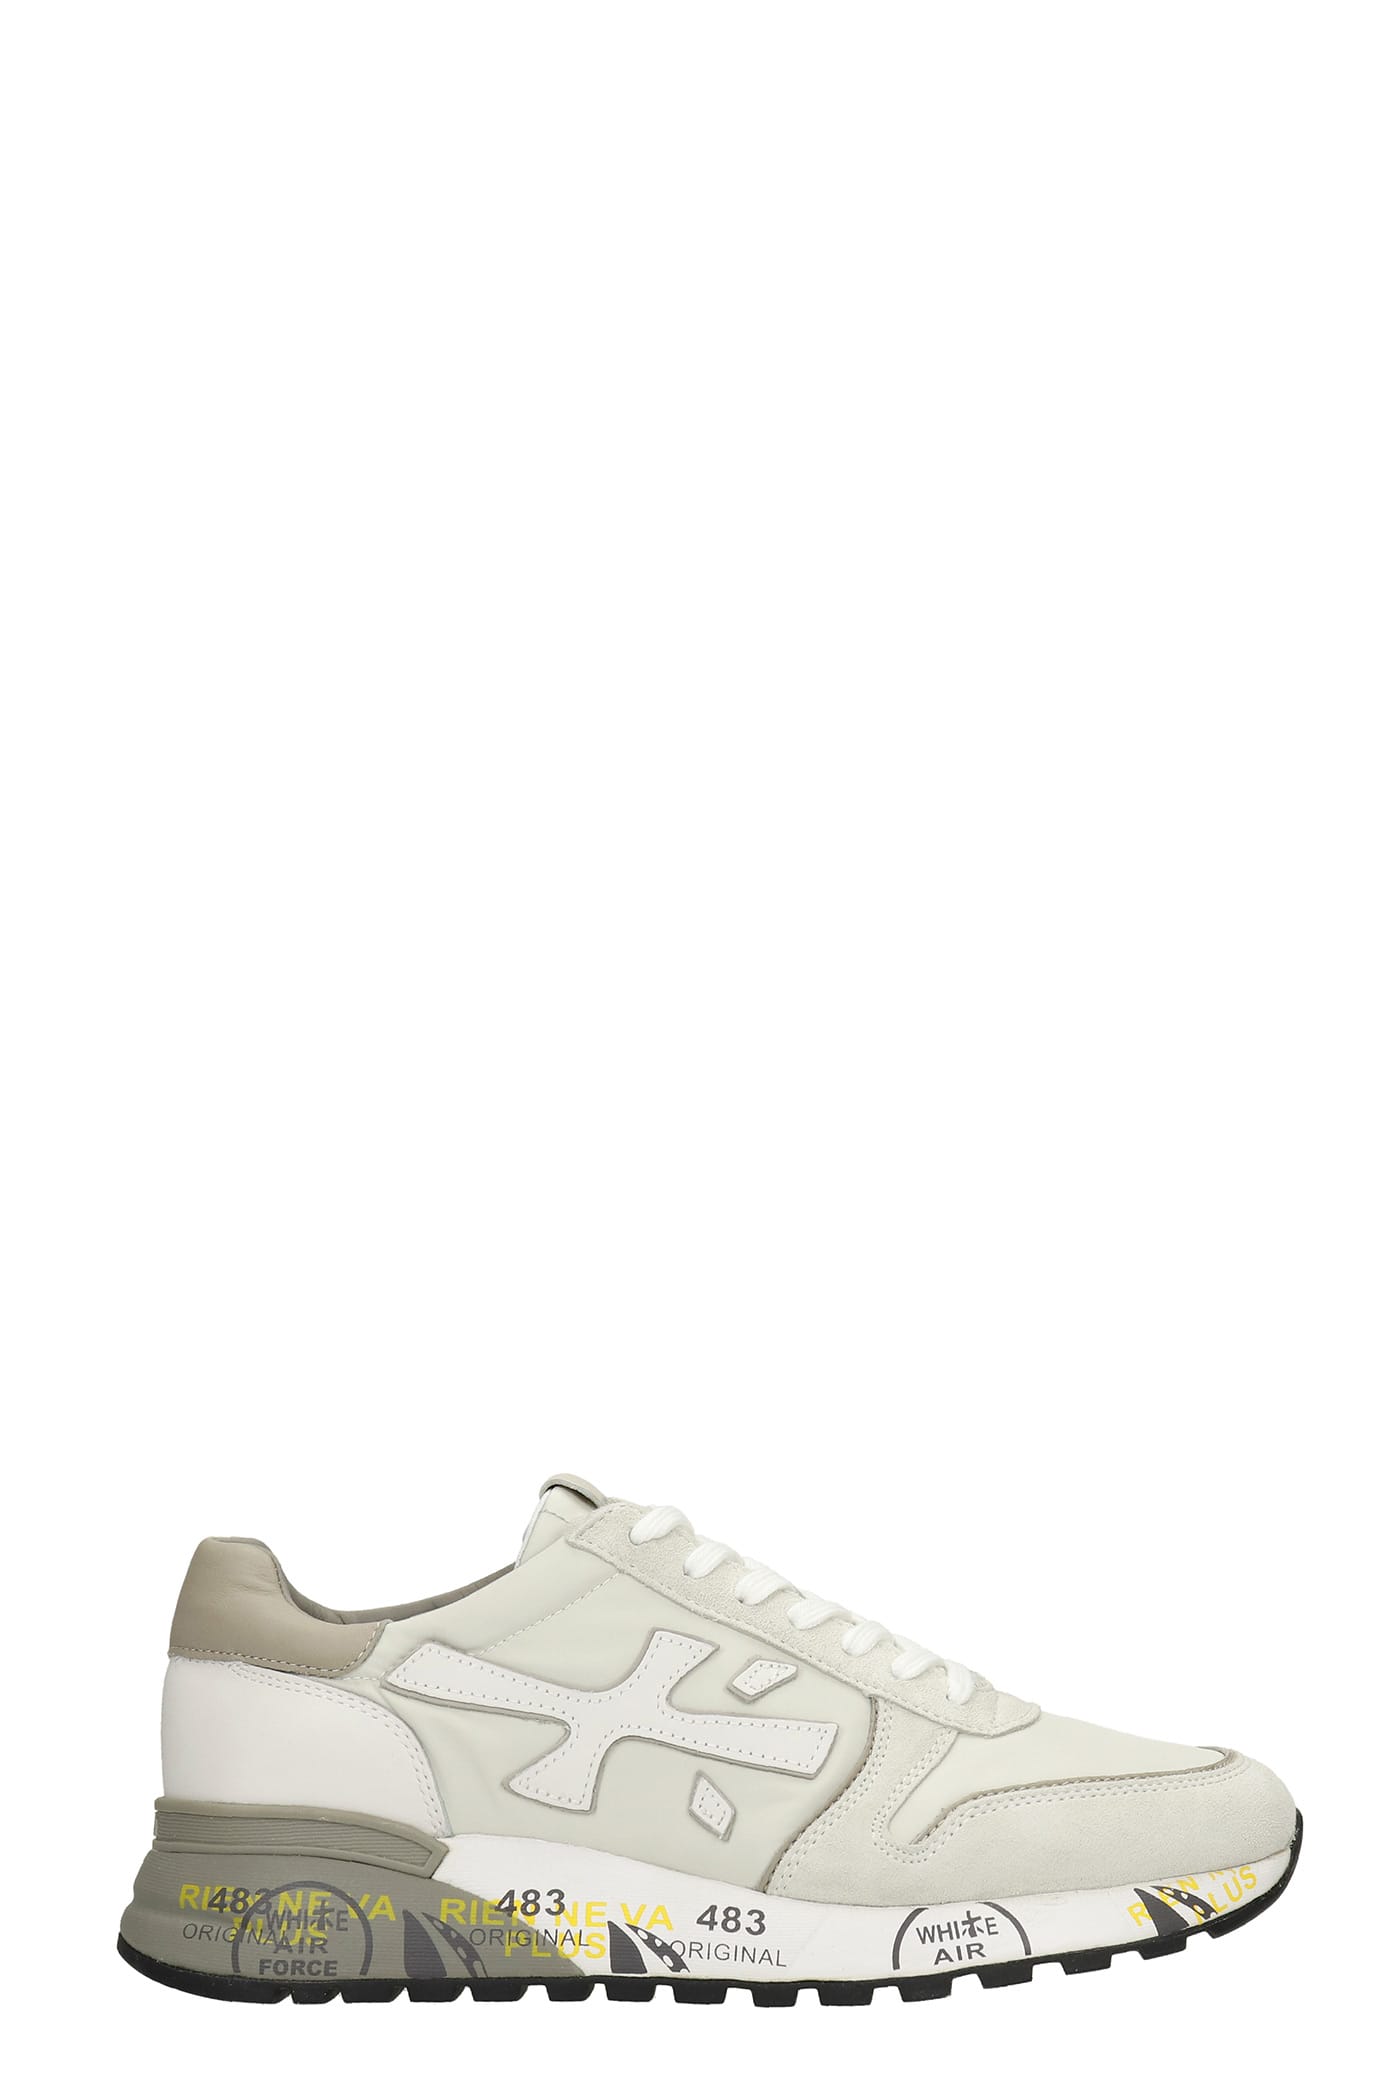 Premiata Mick Sneakers In White Leather